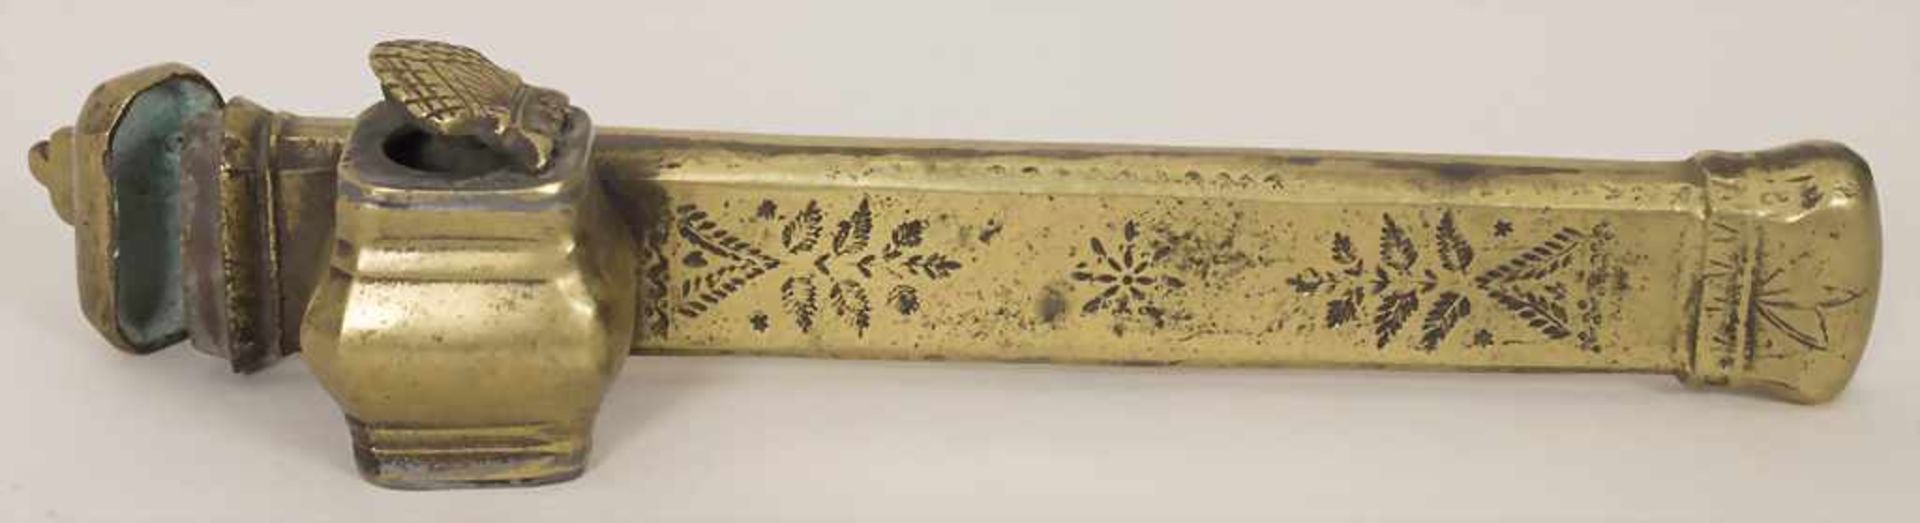 Orientalisches Schreibset / An oriental writing setMaterial: Bronze, Deckor: Tintenfass mit